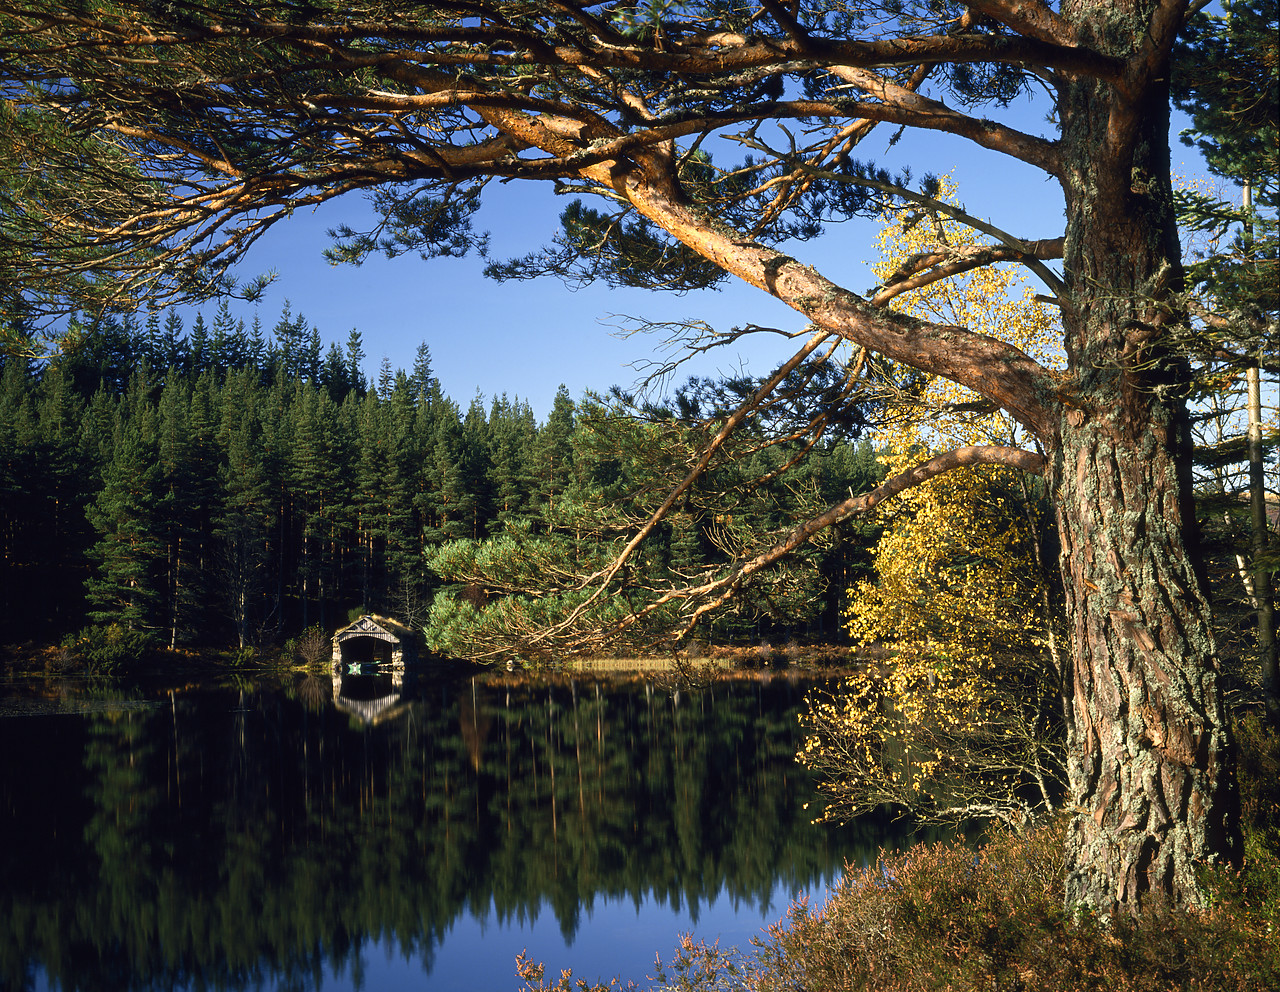 #934467-1 - Loch Tanar, Aboyne, Grampian Region, Scotland